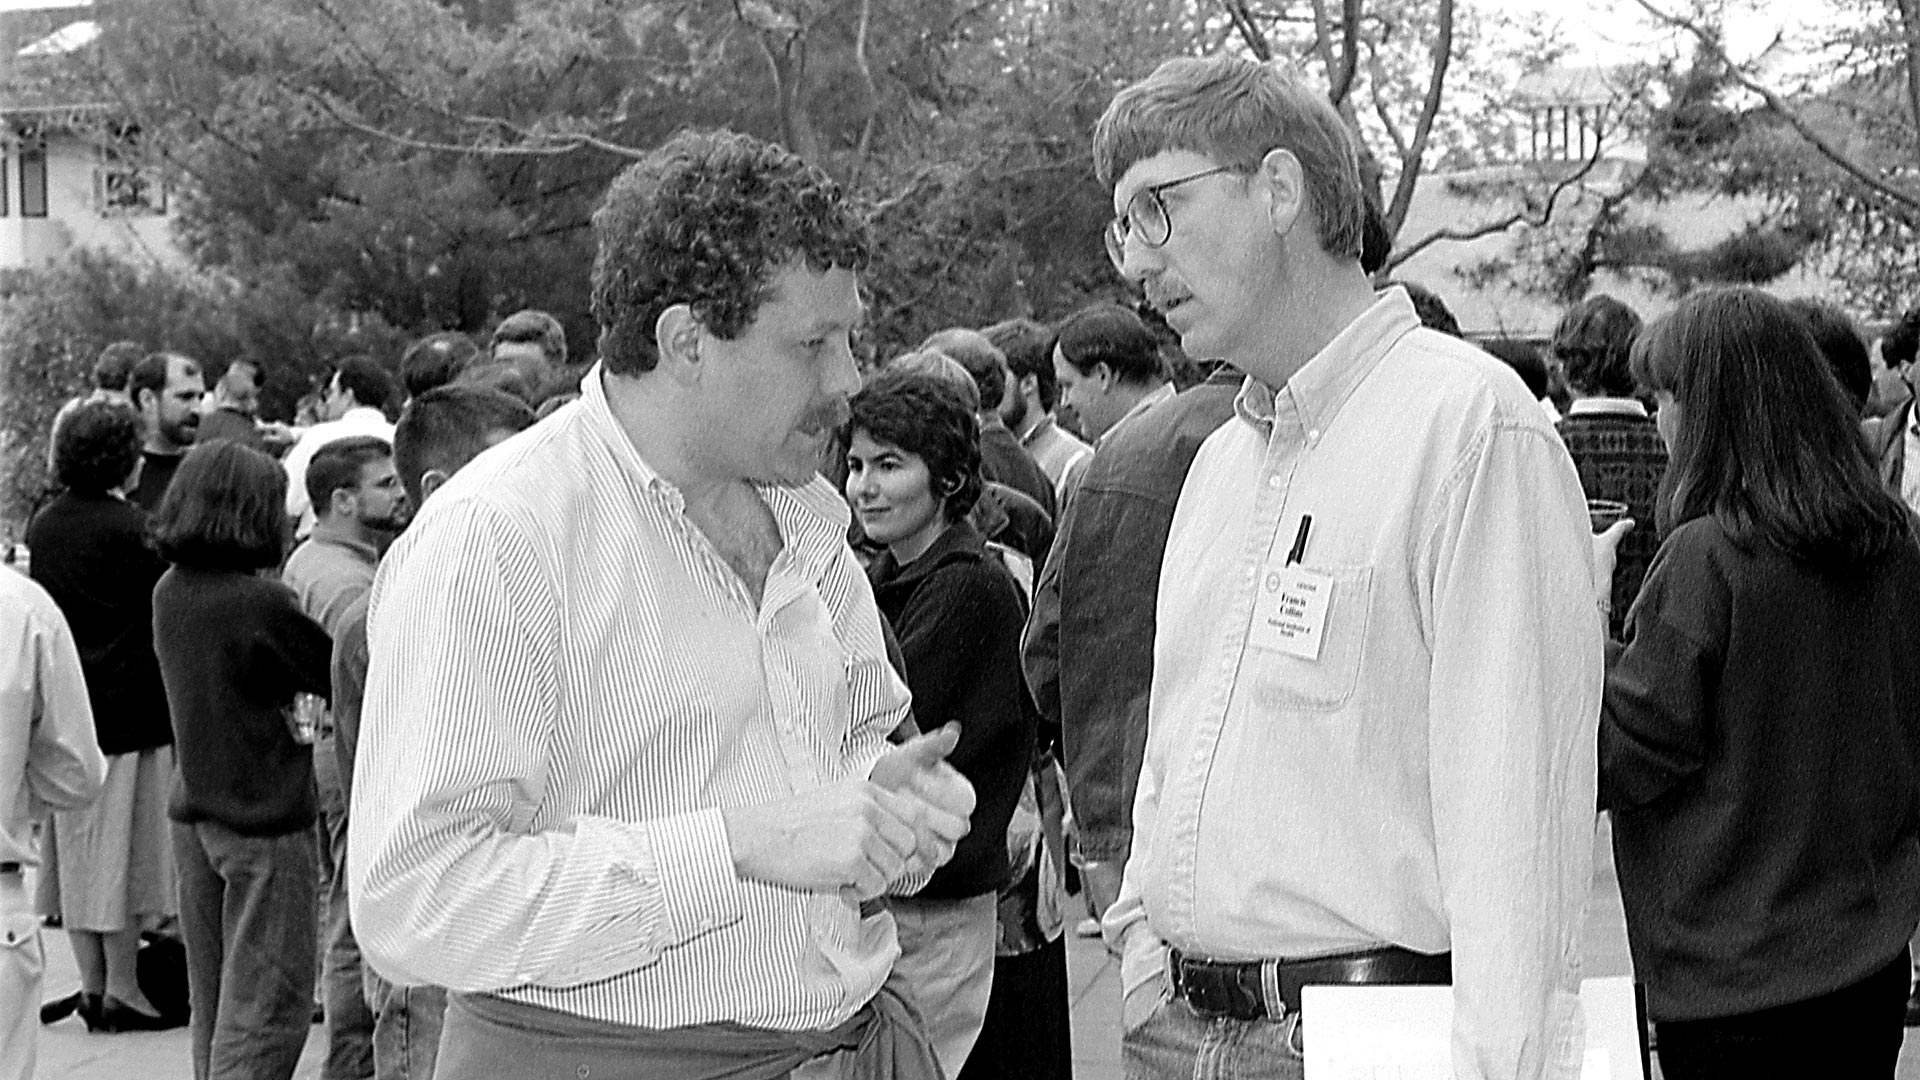 photo of Eric Lander and Francis Collins at a meeting at CSHL 1988